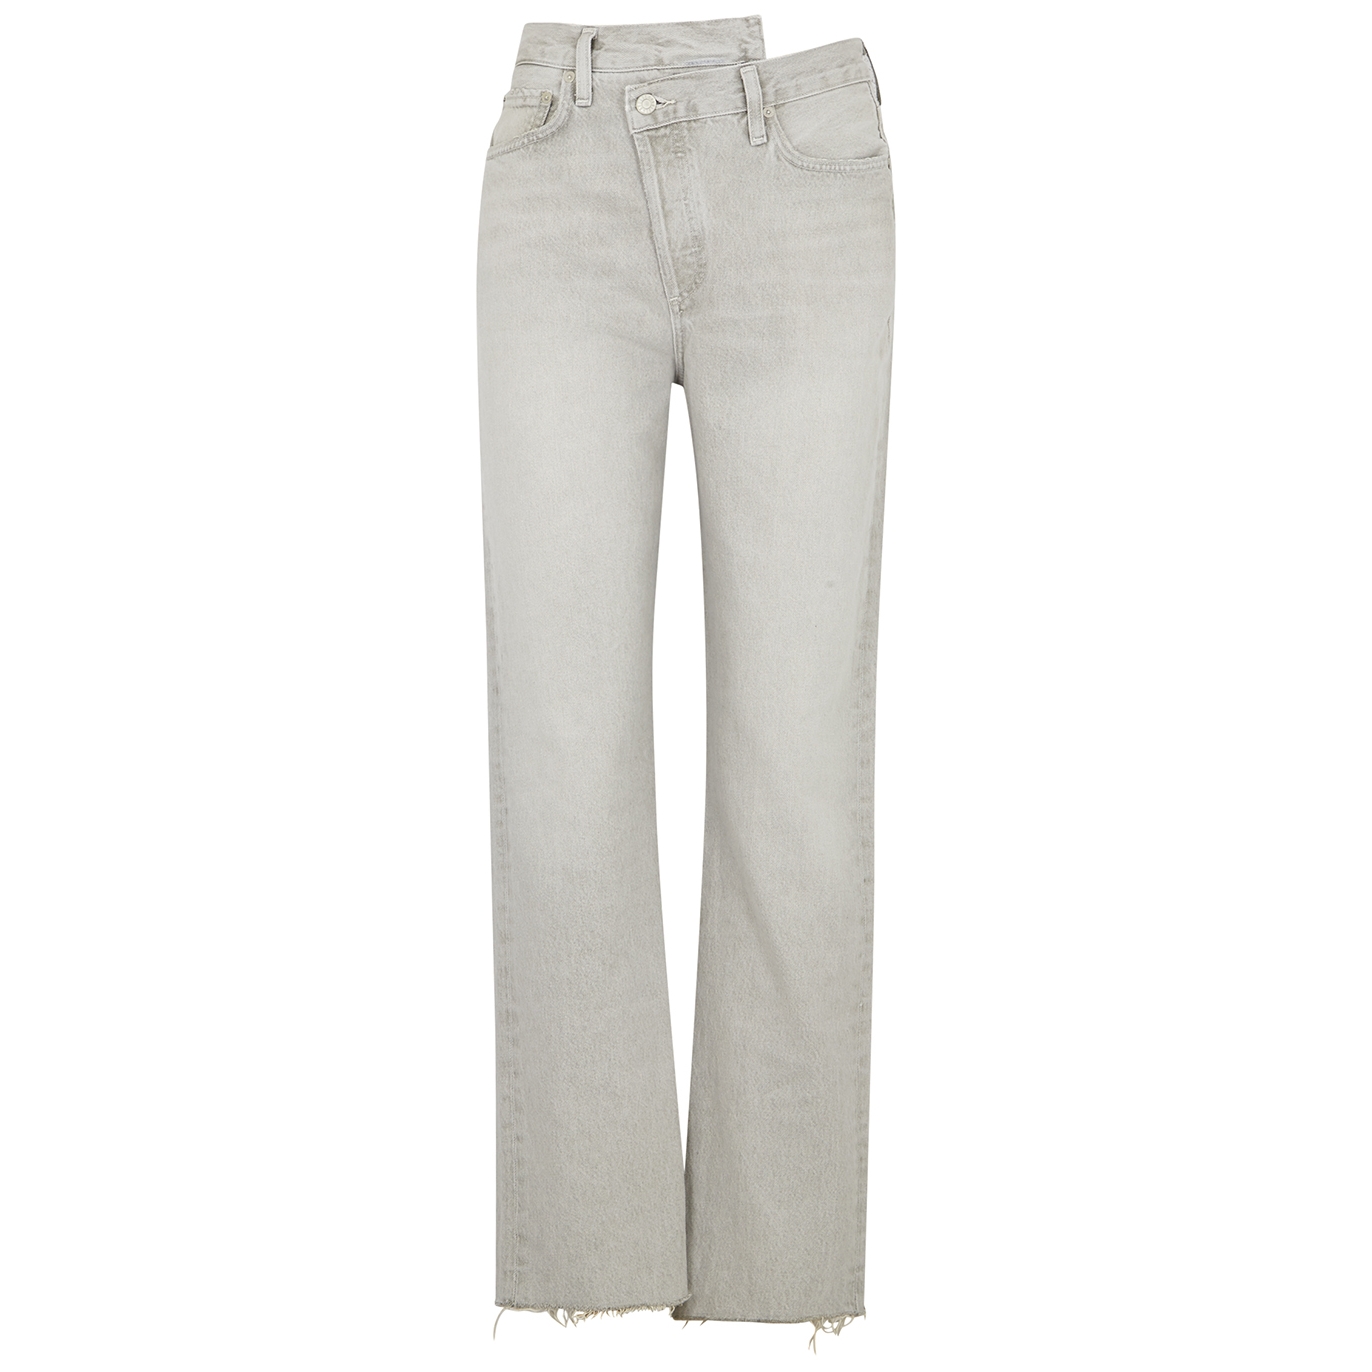 Agolde Criss Cross Light Grey Straight-leg Jeans - W26